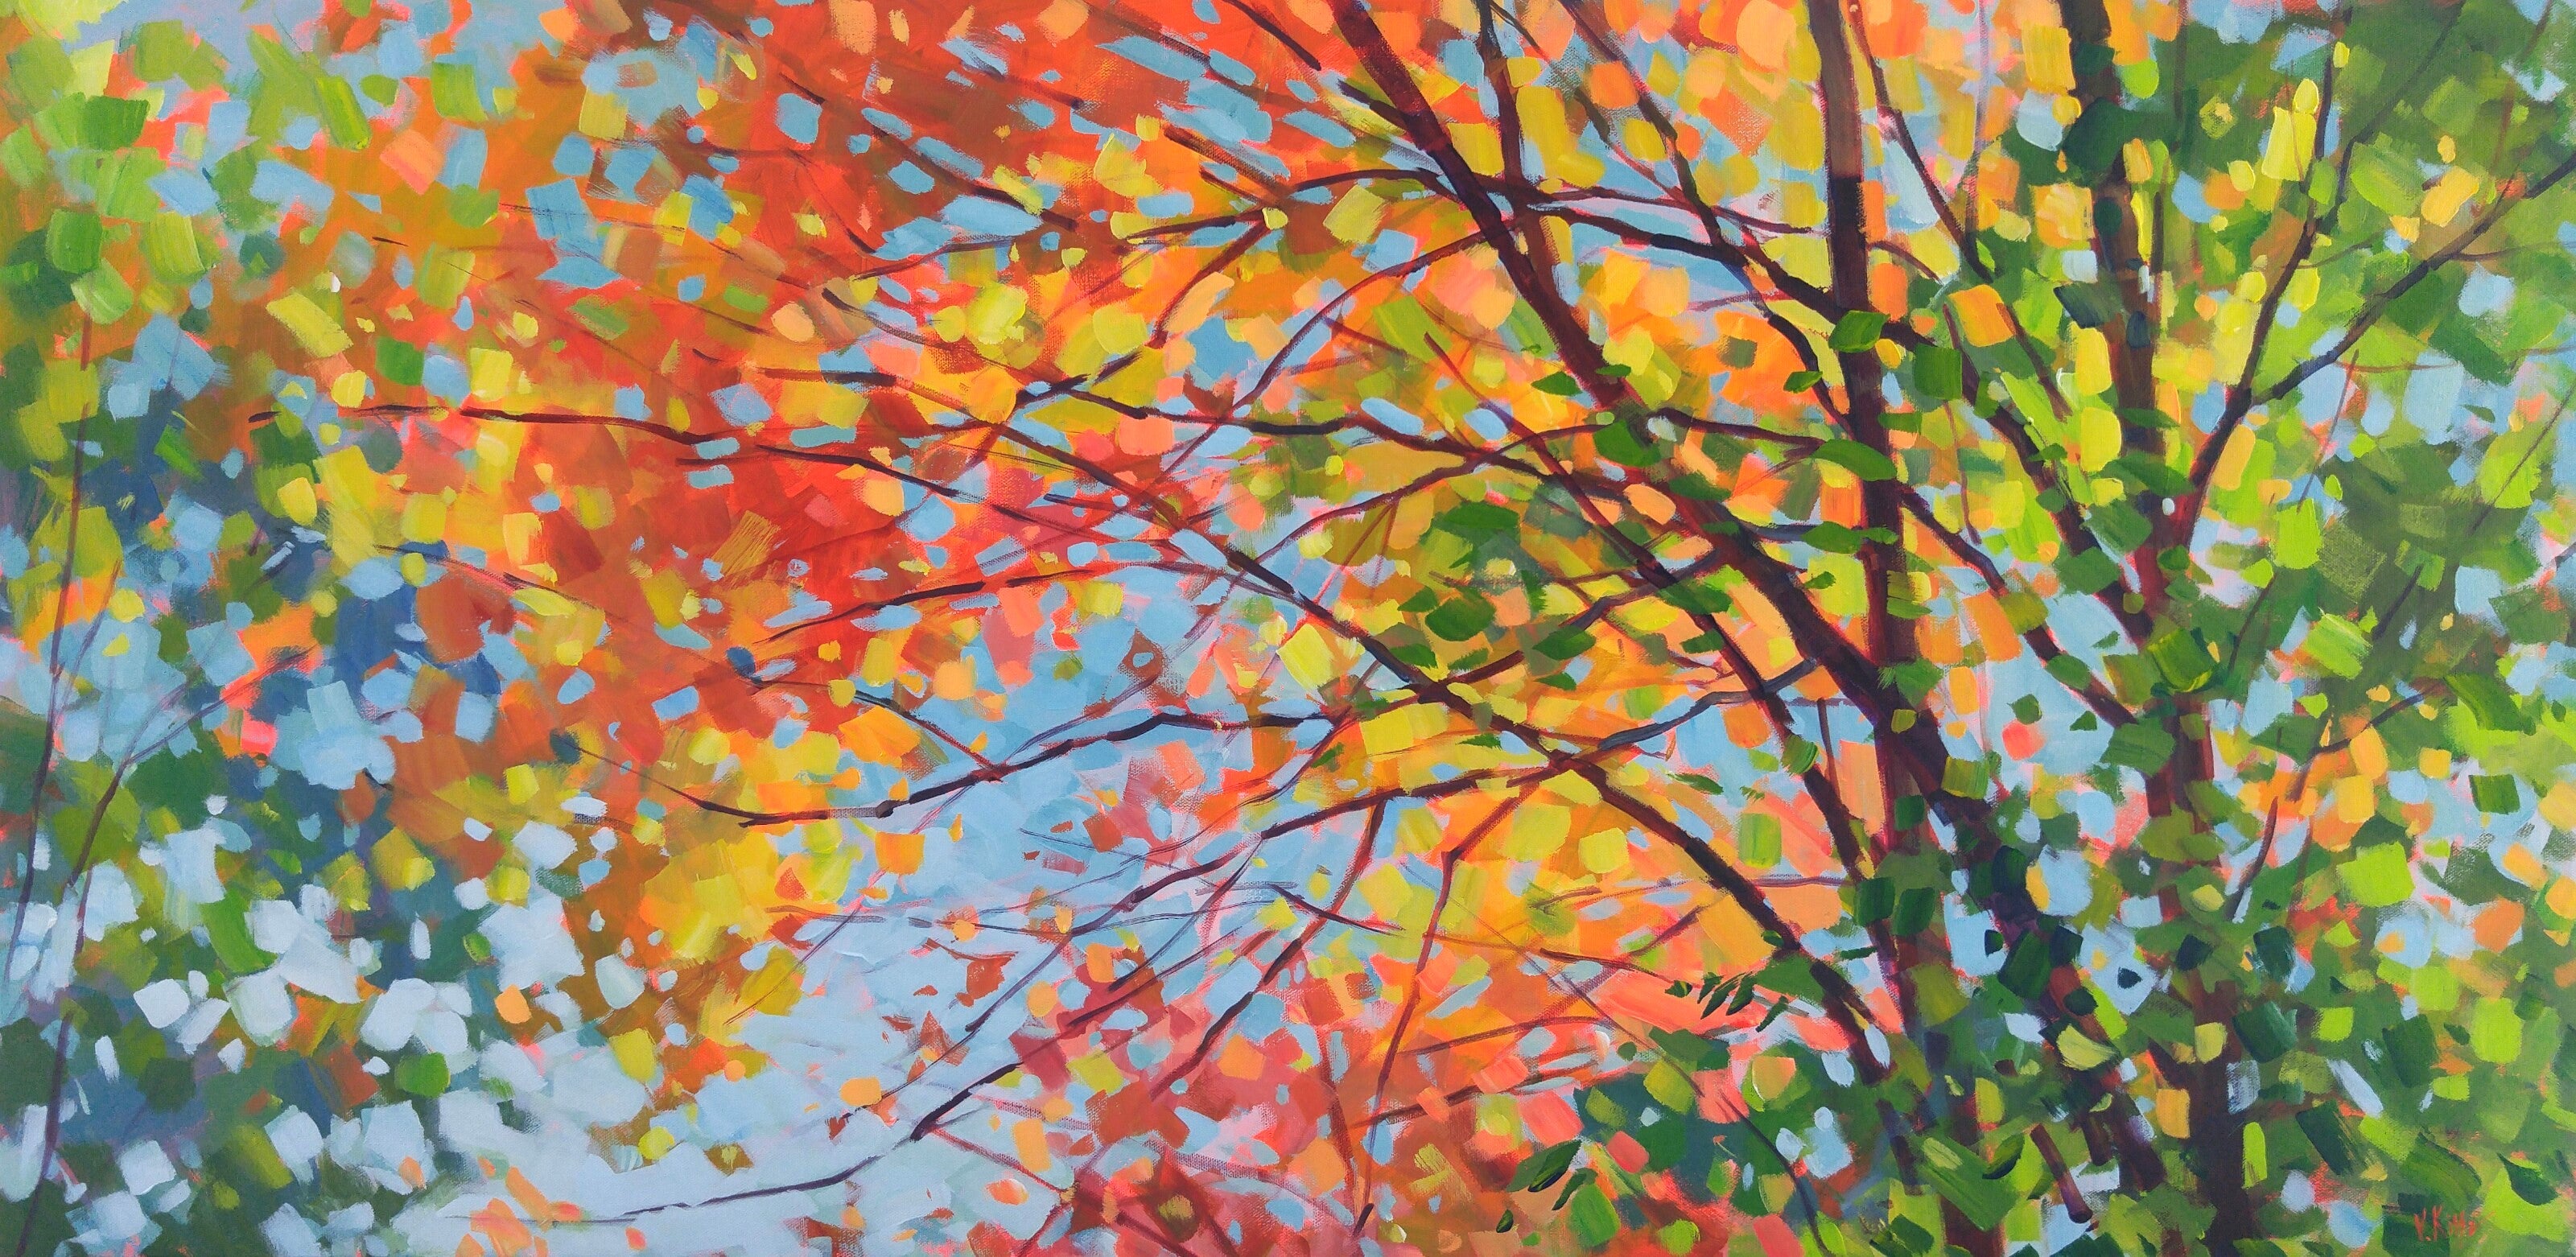 Autumn's Fruit 18 x 24 inches acrylic on canvas